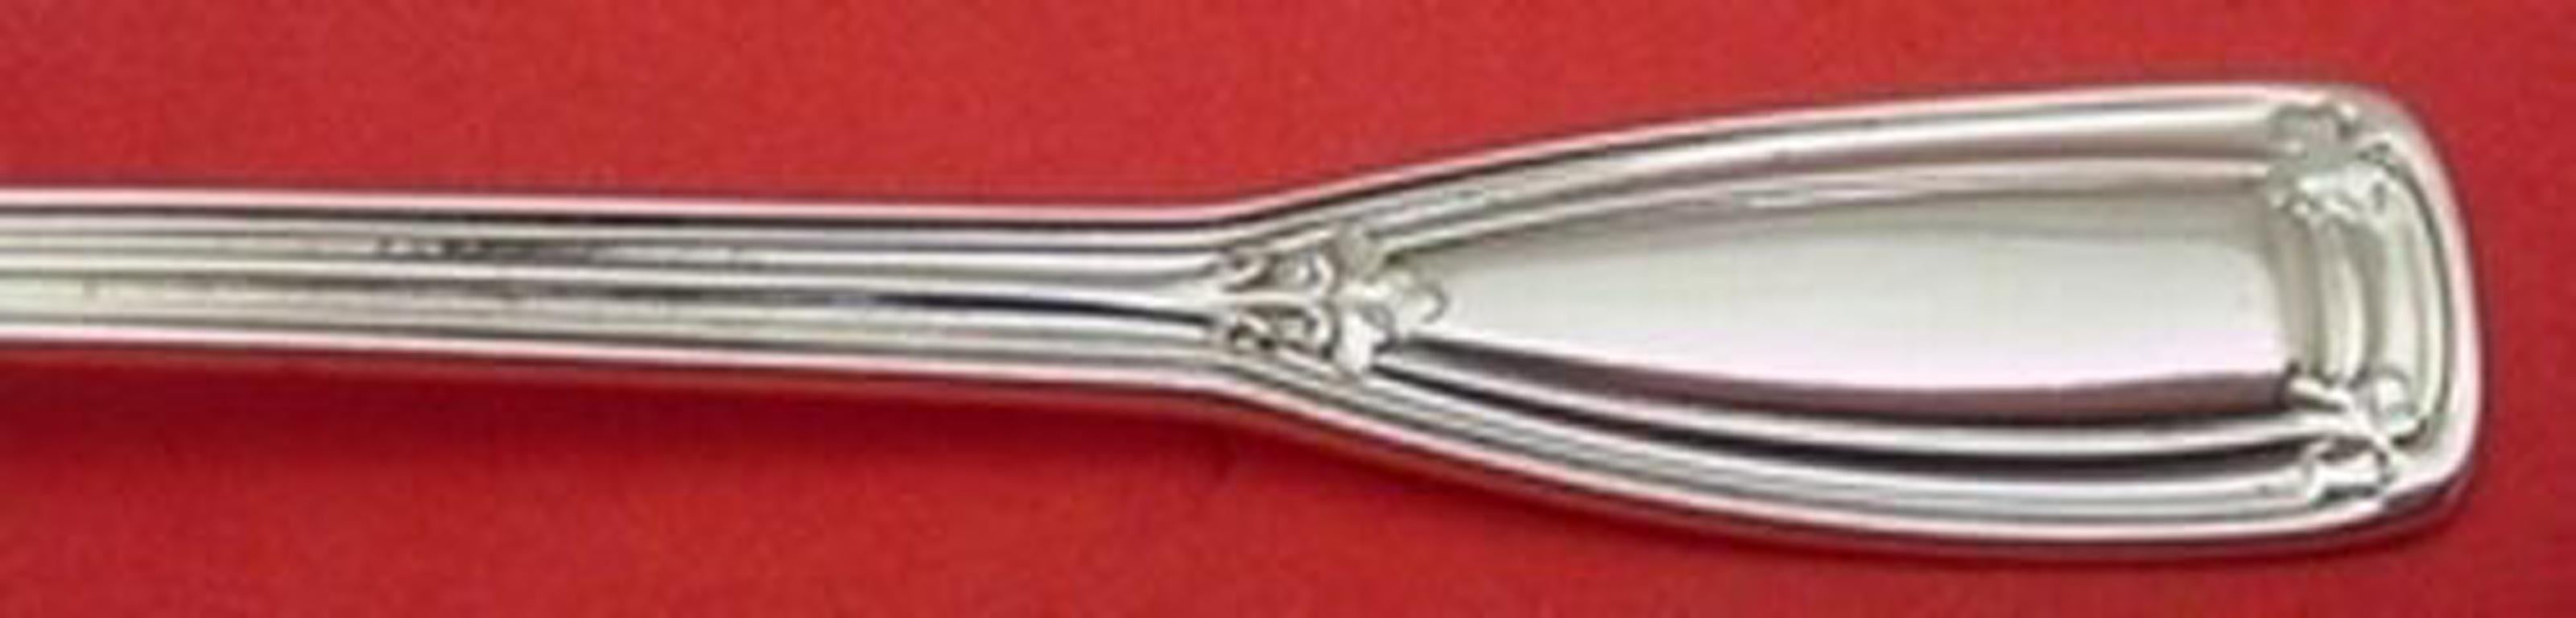 Sterling silver cocktail fork, 6